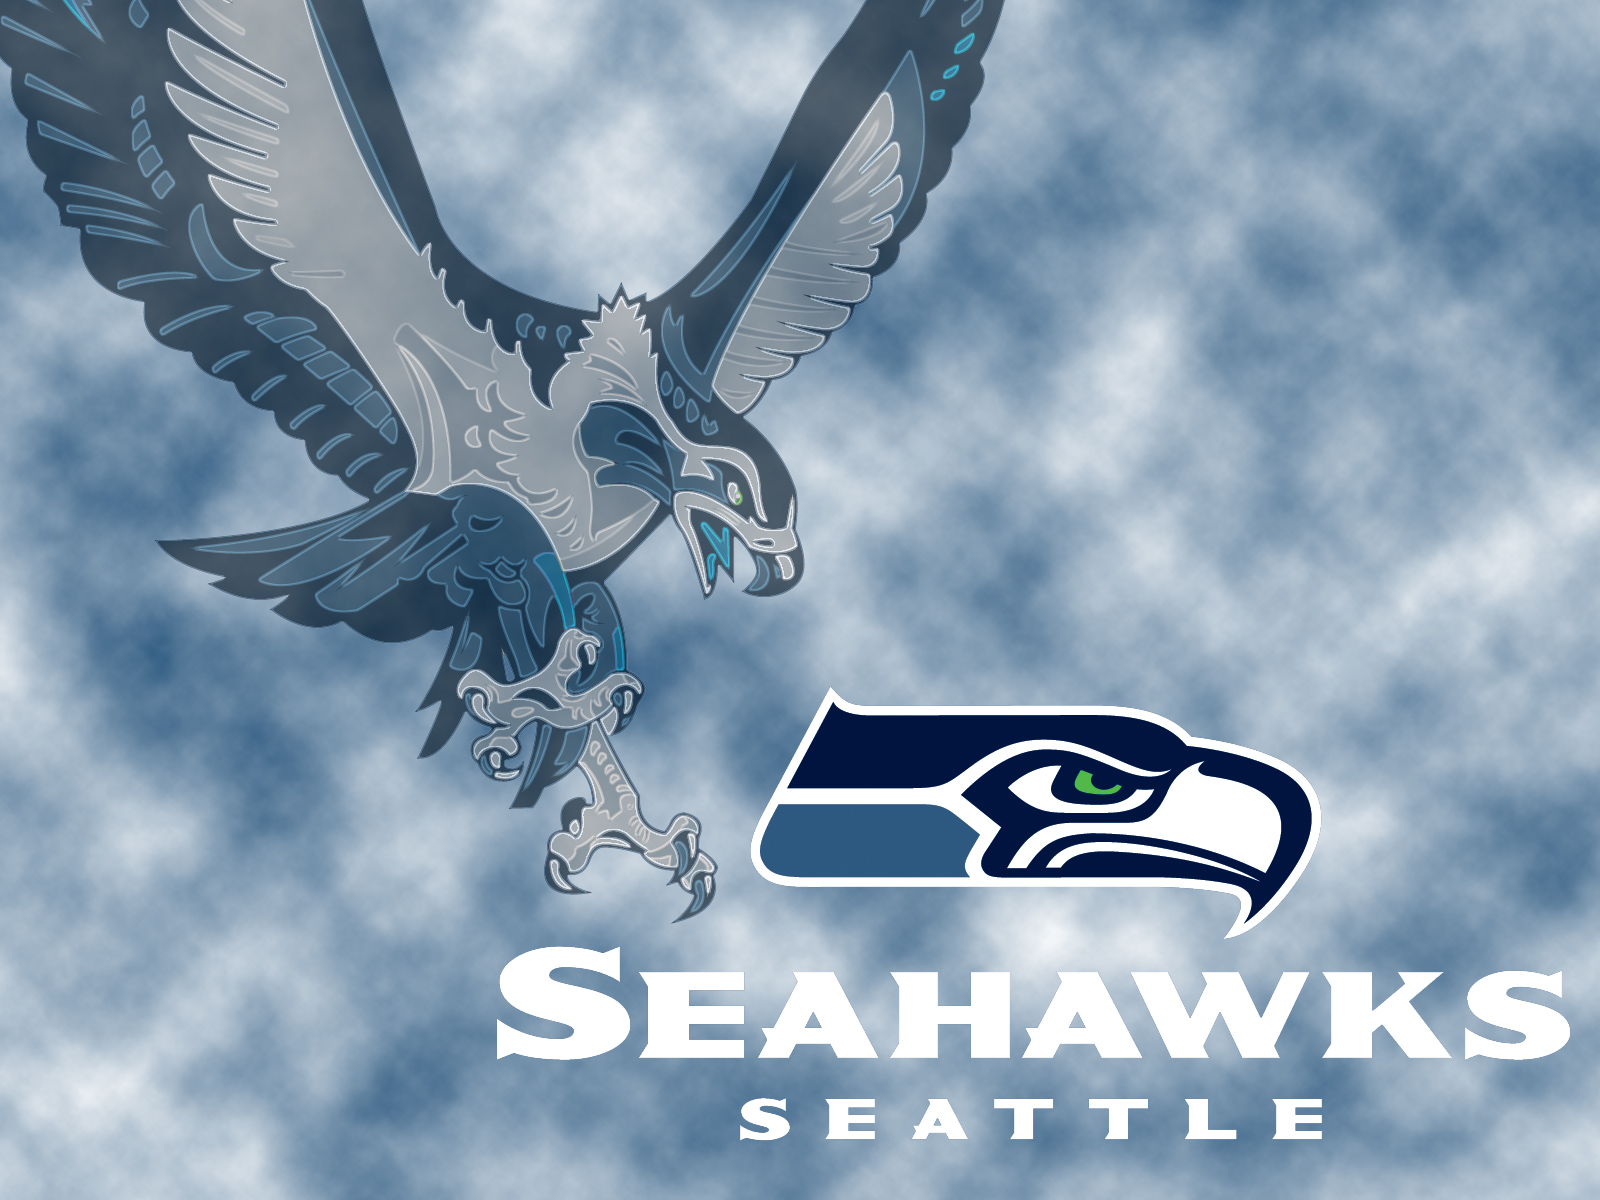 Seattle Seahawks Mascot Wallpaper 1280x800 08 06 2011 picture